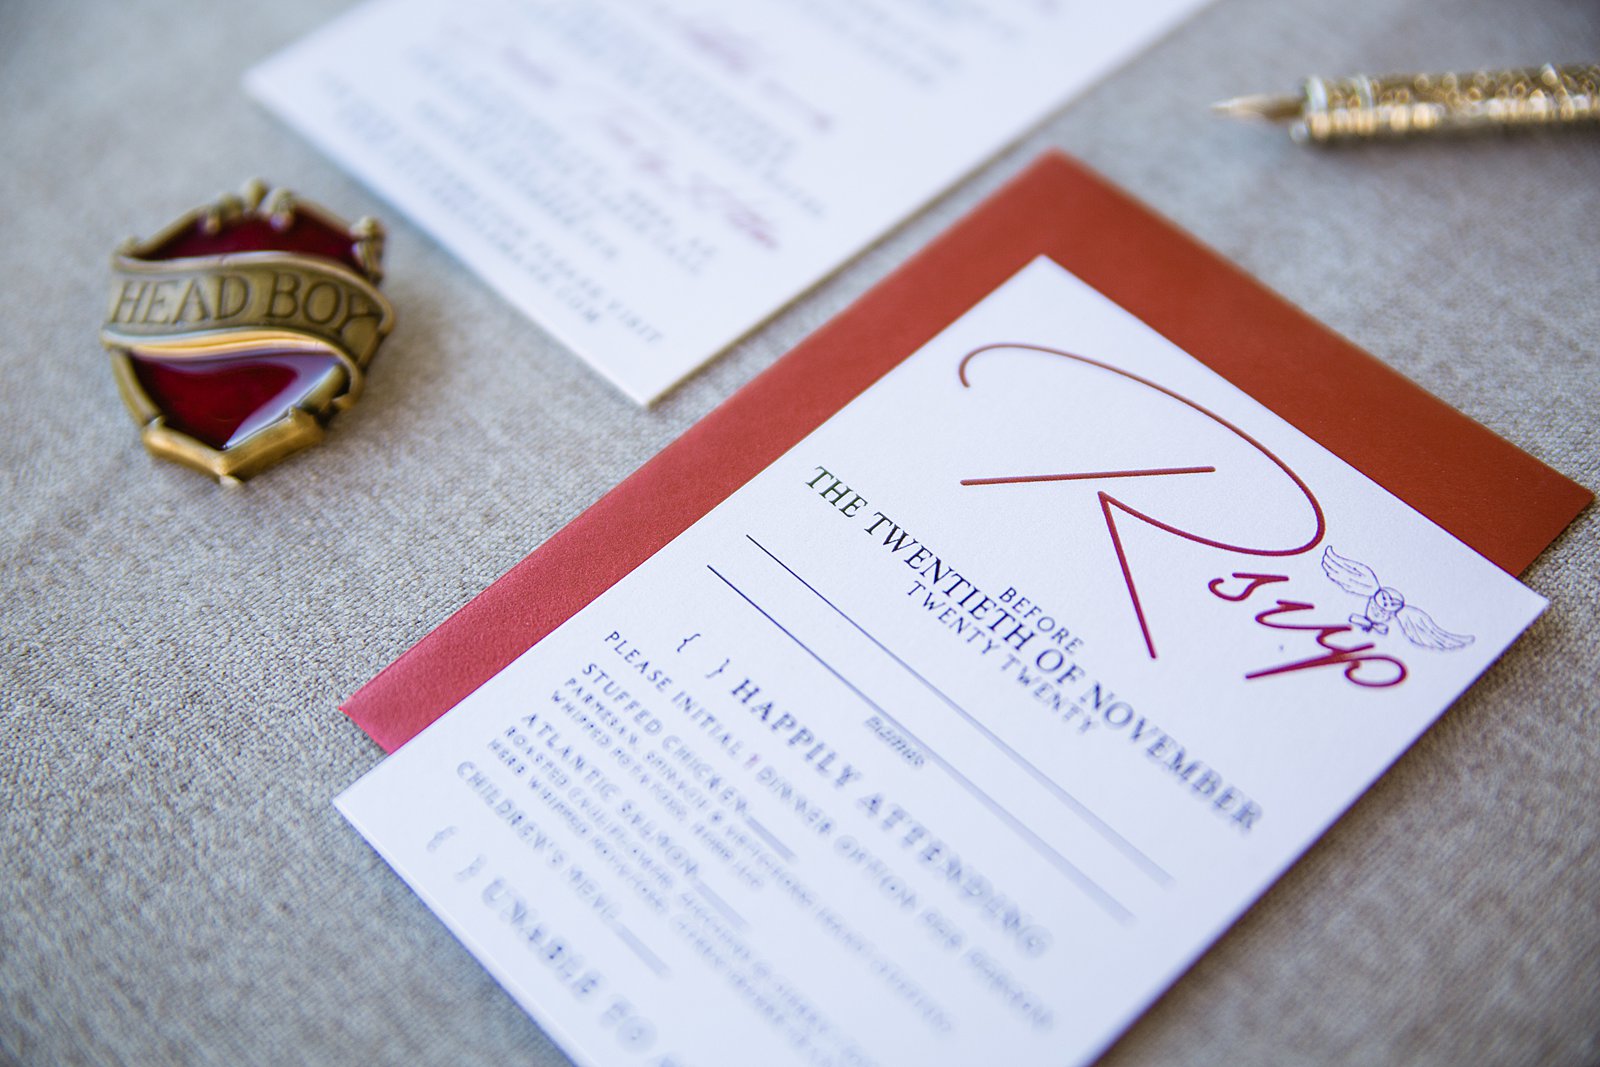 Harry Potter inspired wedding invitations in jewel tones by Phoenix wedding photographer PMA Photography.